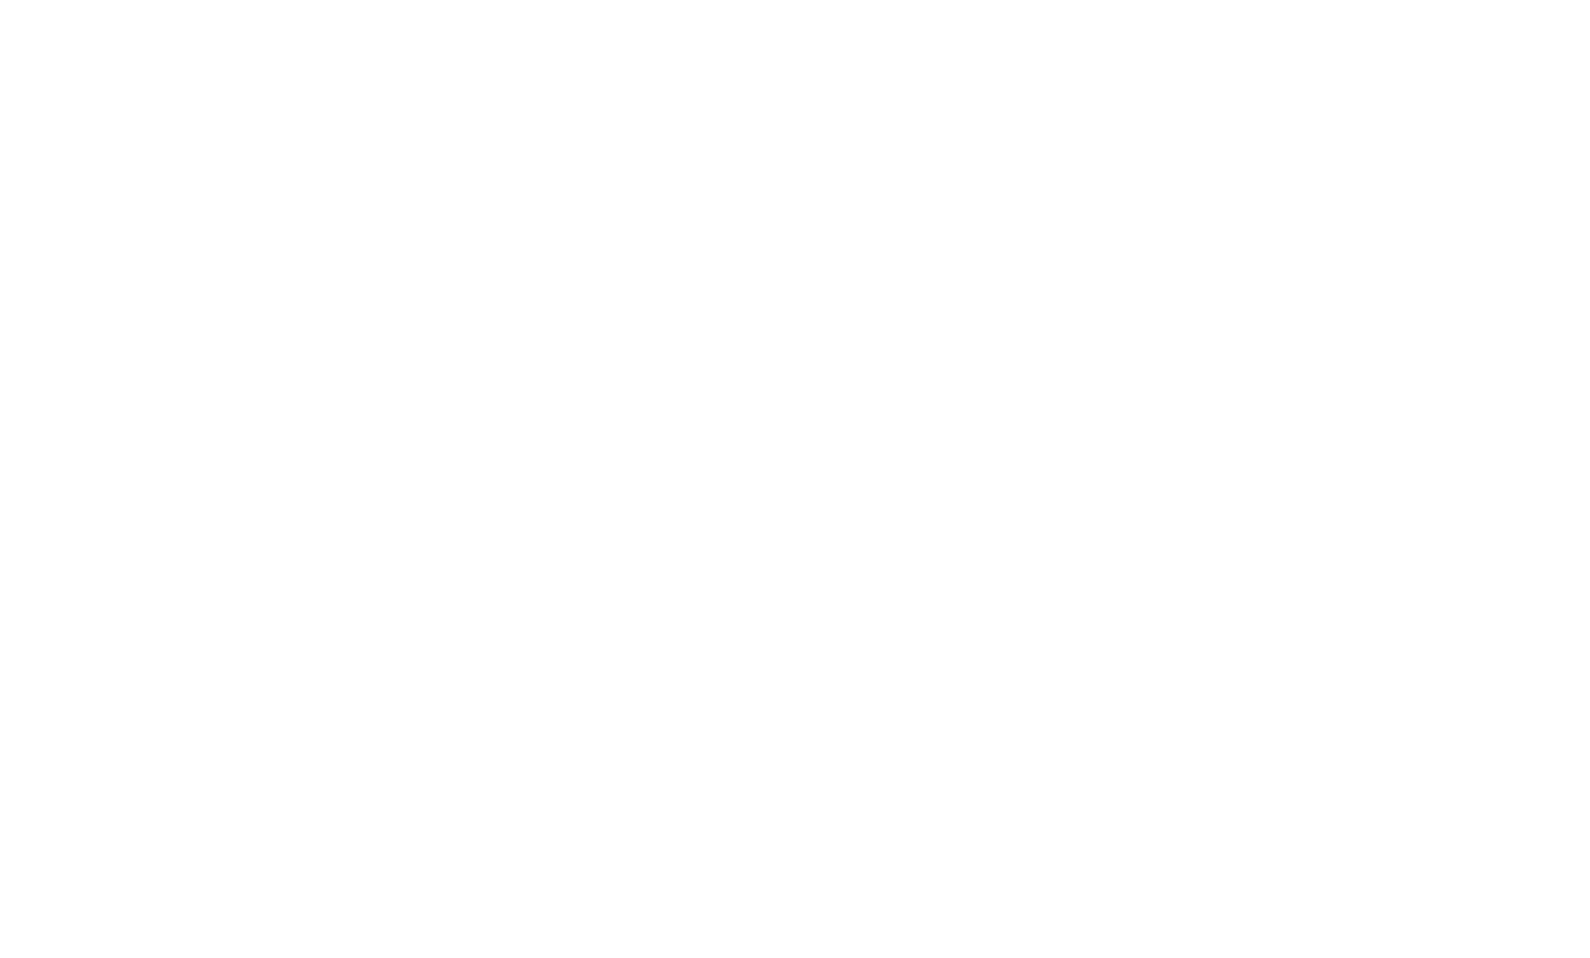 user-summit-logo-wht